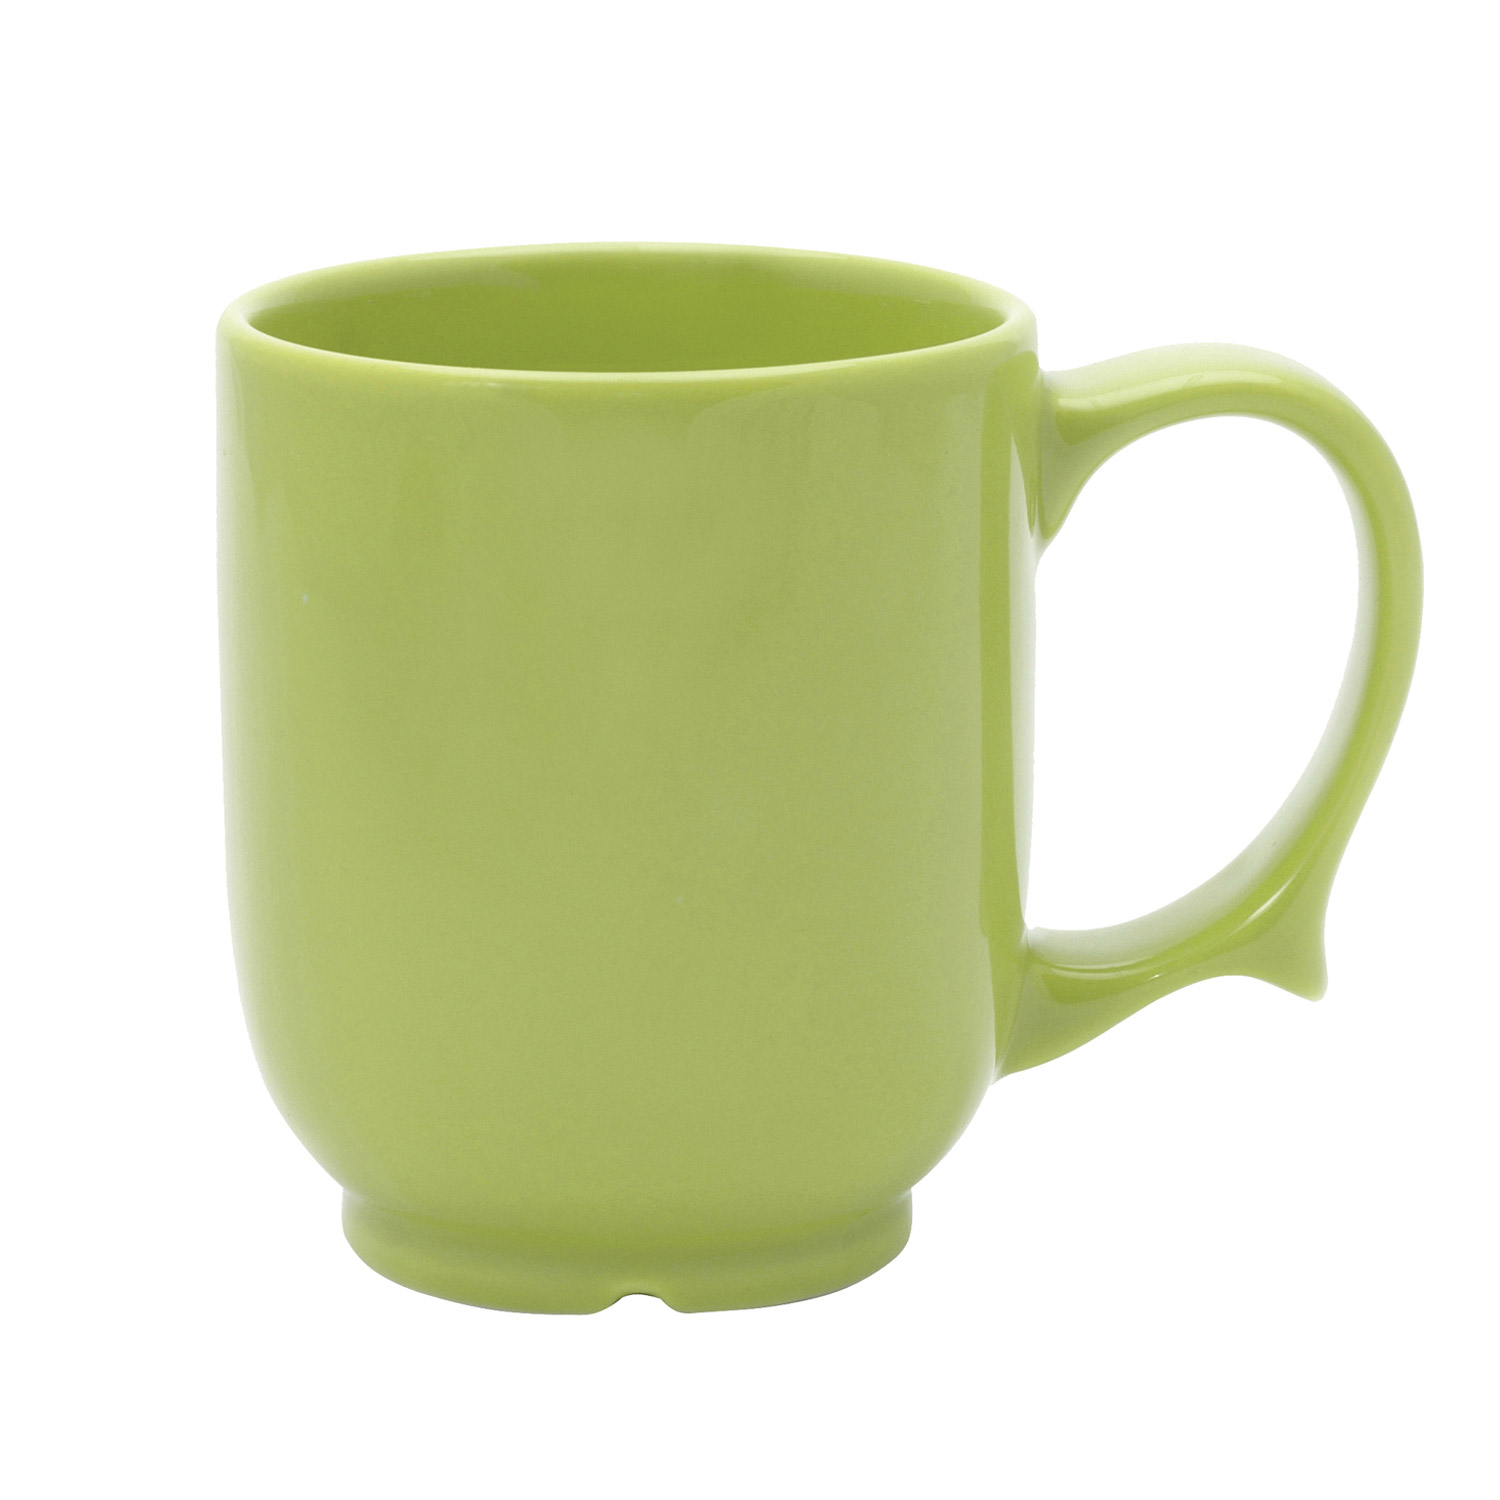 Dignity - One Handled Ceramic Mug - 250ml - Green